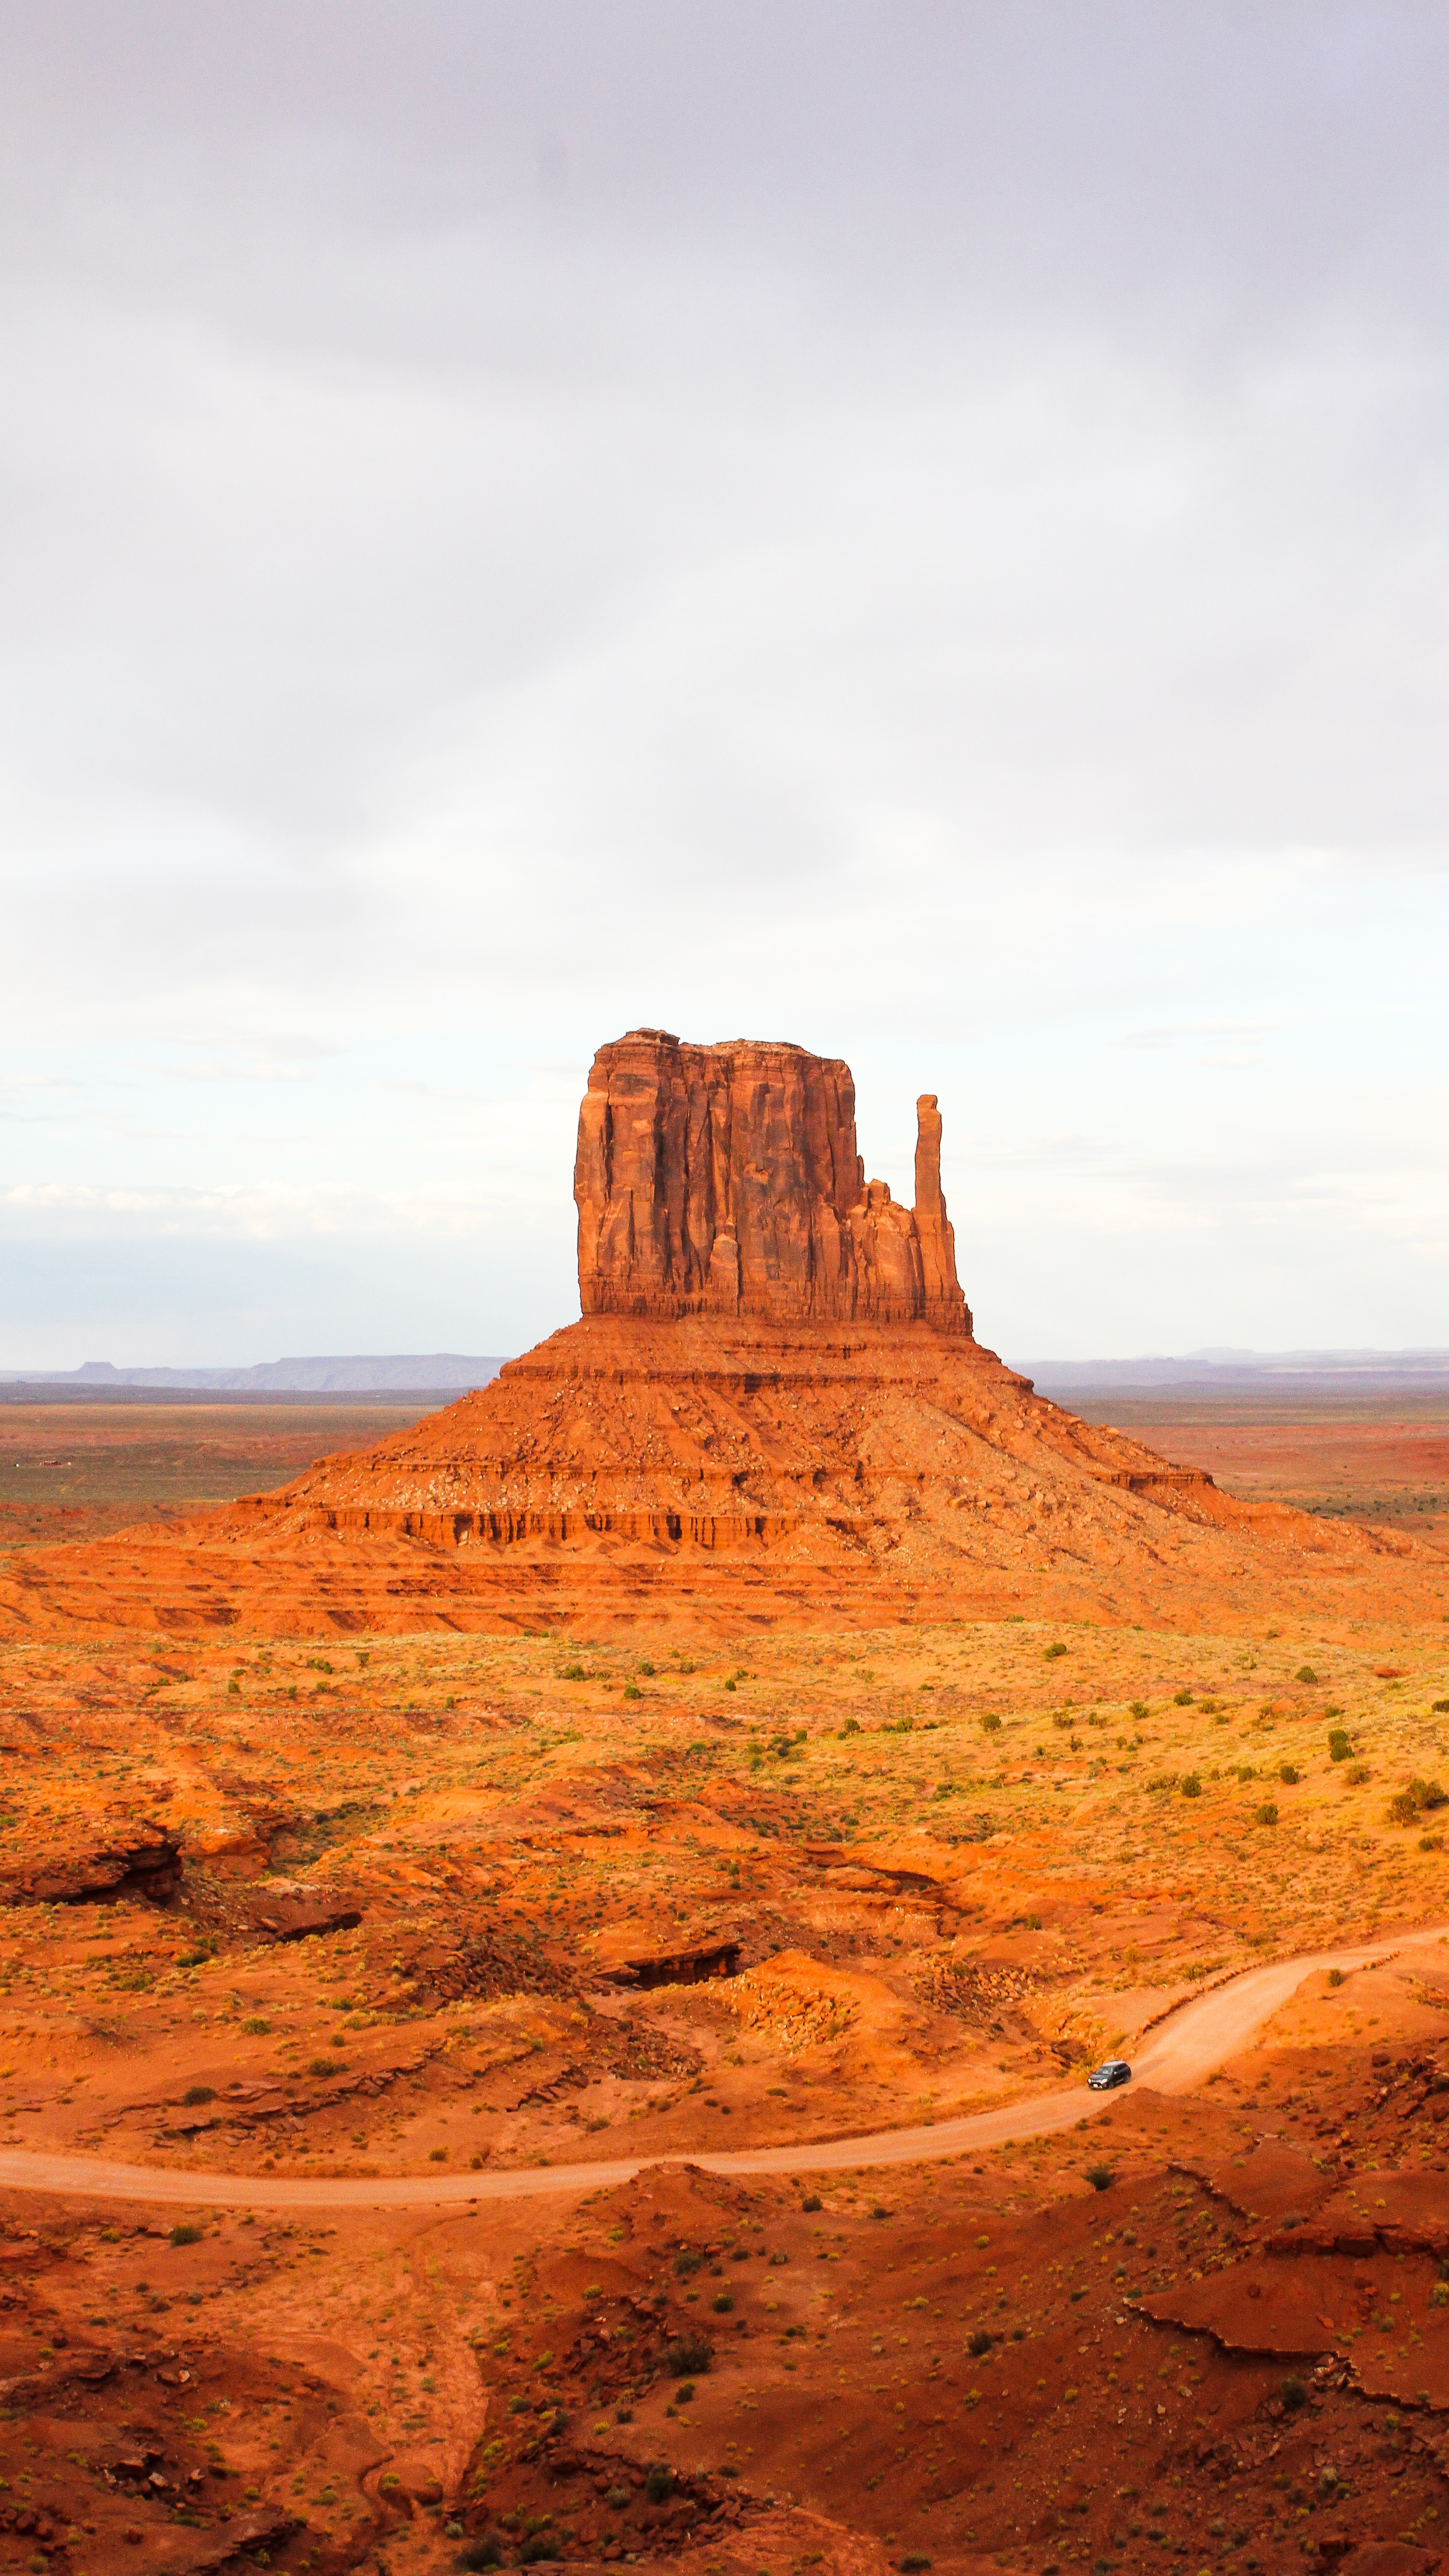 PCデスクトップに峡谷, 砂漠, 岩, 褐色, 自然, 風景画像を無料でダウンロード